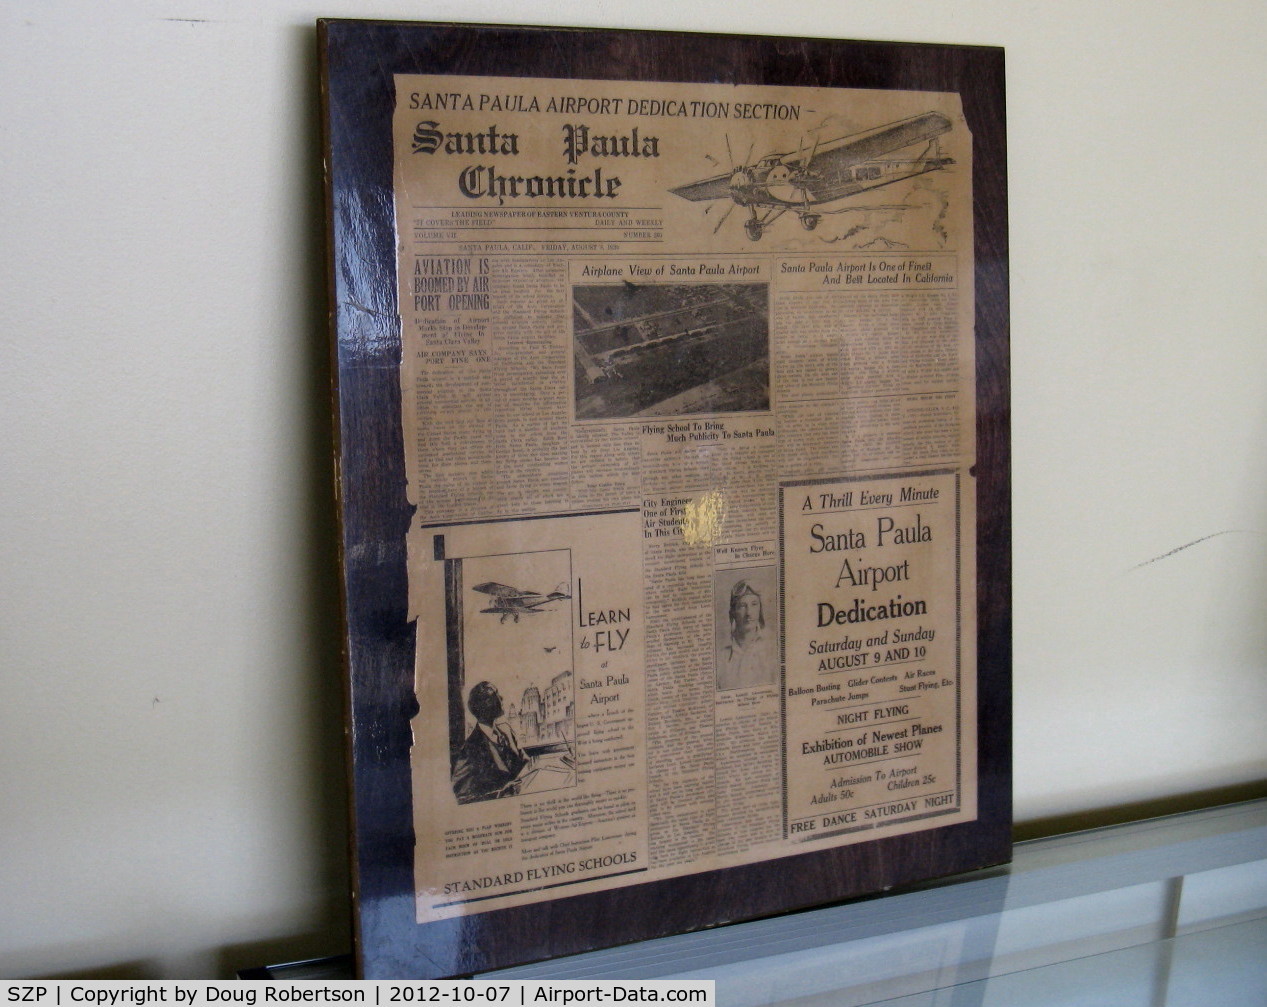 Santa Paula Airport (SZP) - Aviation Museum of Santa Paula. 1930 period newspapers with new airport news stories. Airport Dedication, August 9-10, 1930. Learn to Fly at Santa Paula Airport.